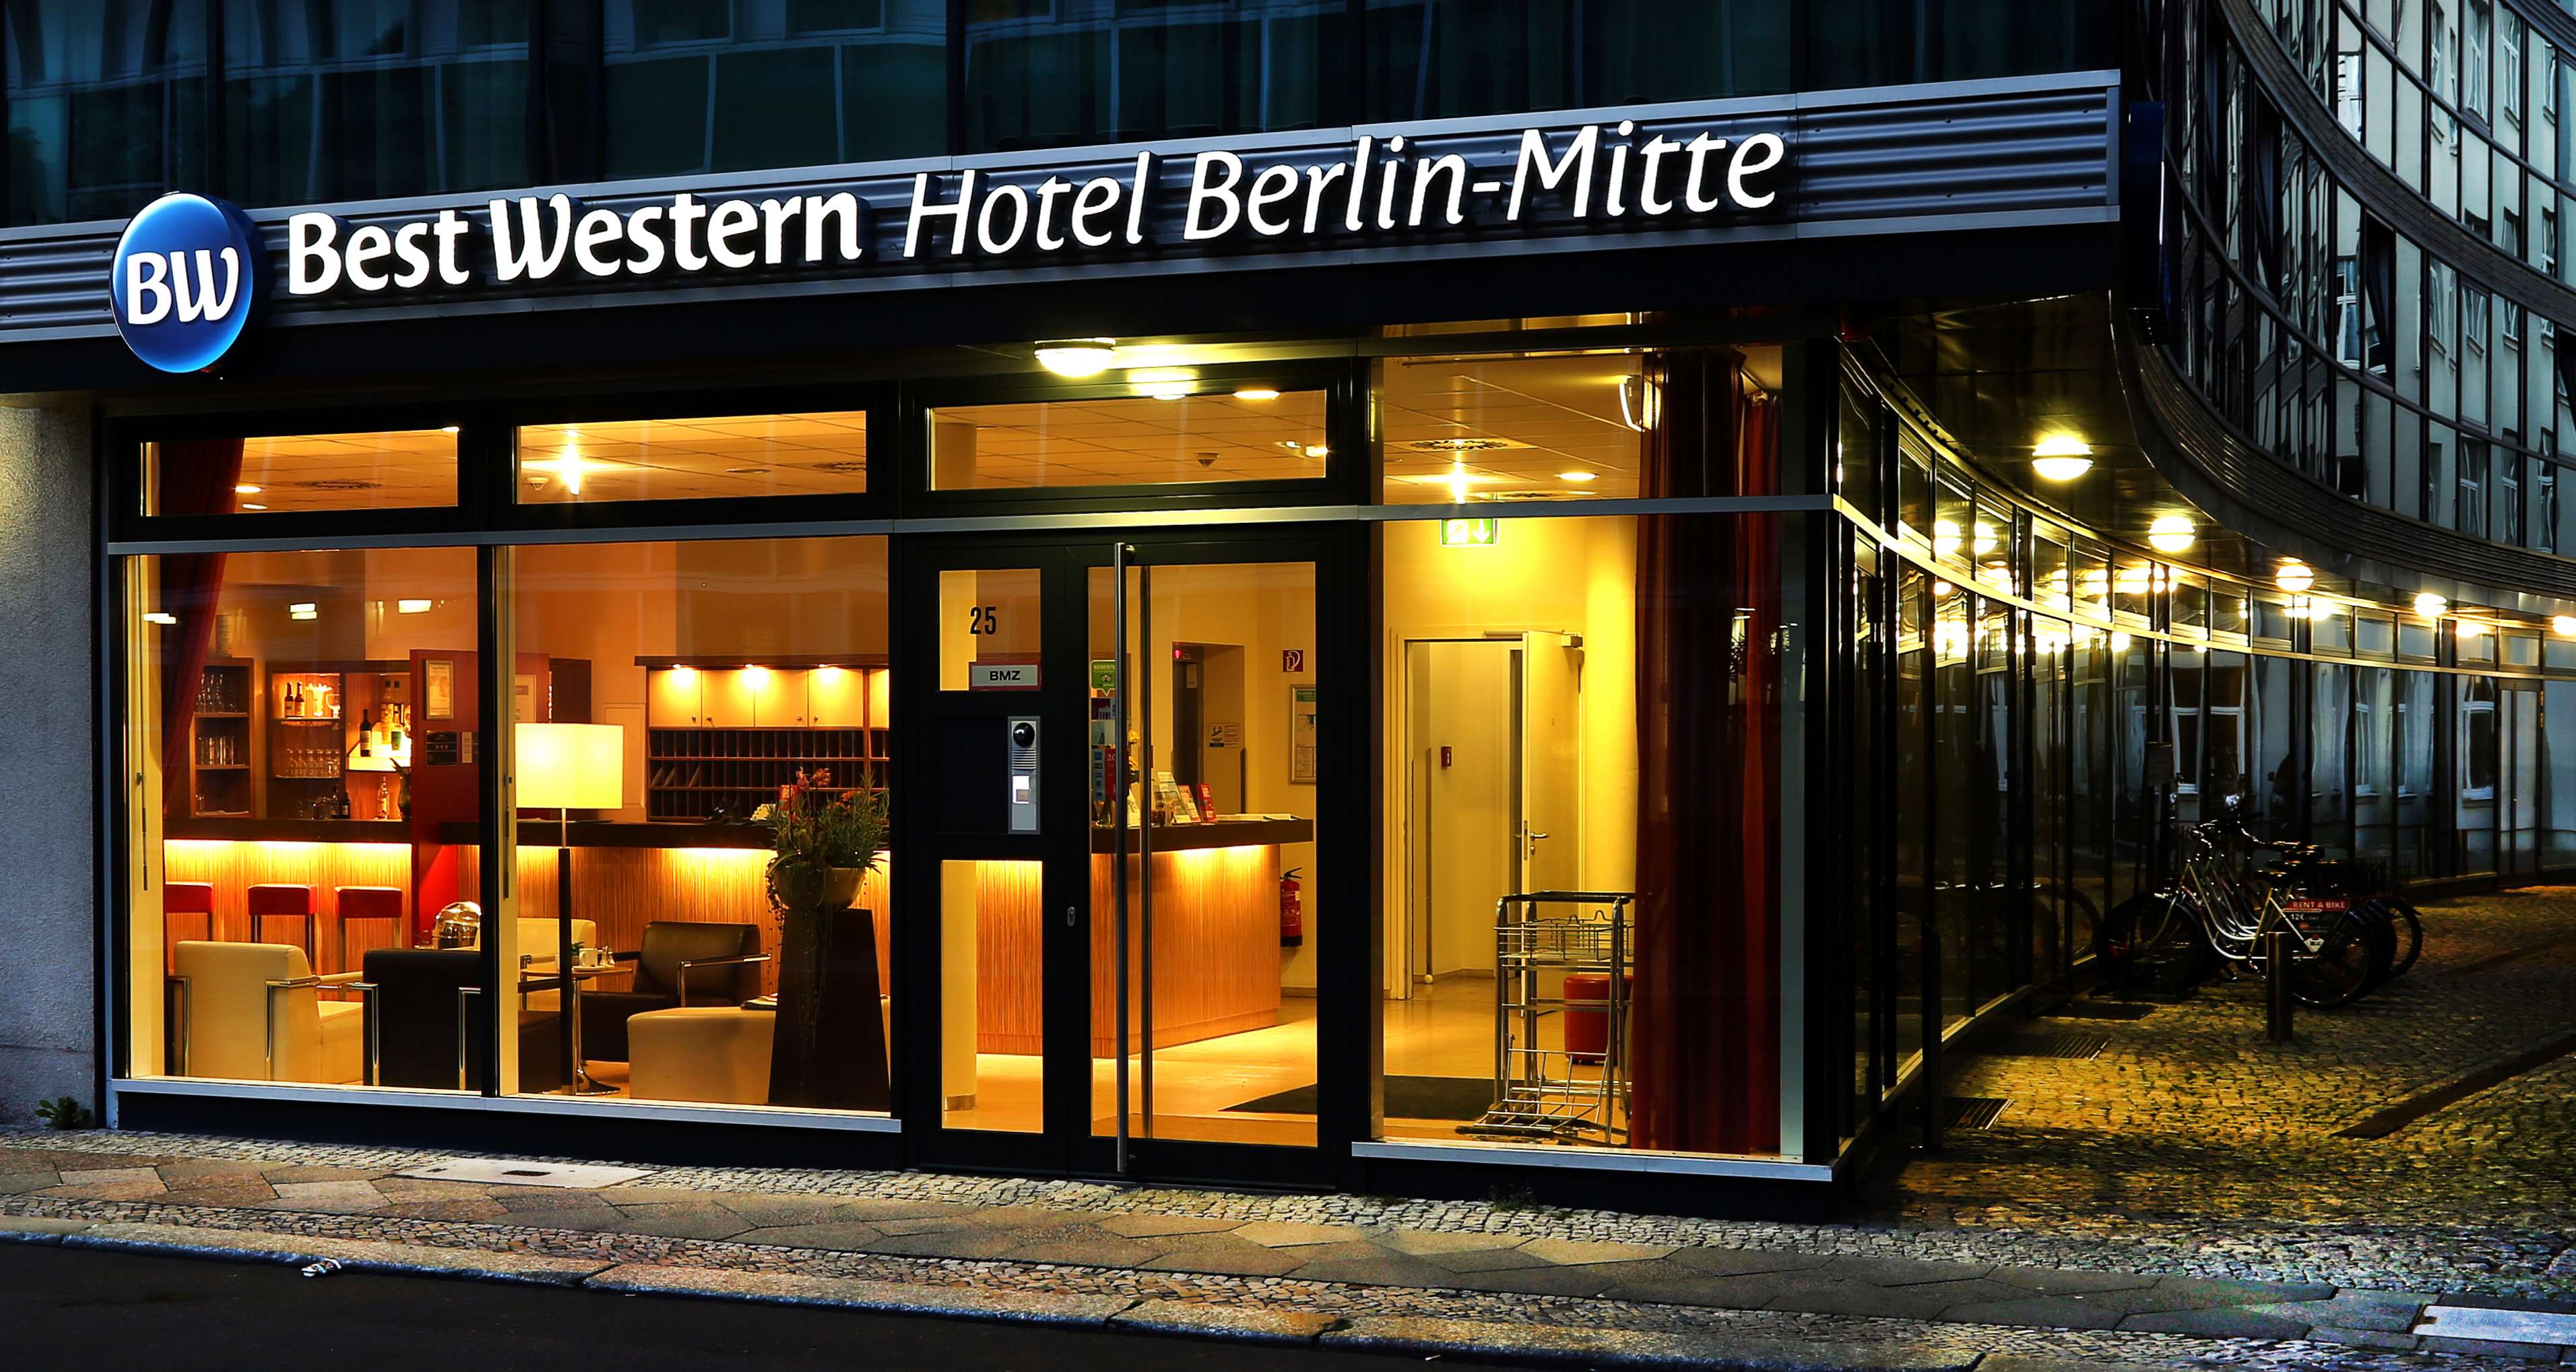 Best Western Hotel Berlin-Mitte, Albrechtstrasse 25 in Berlin